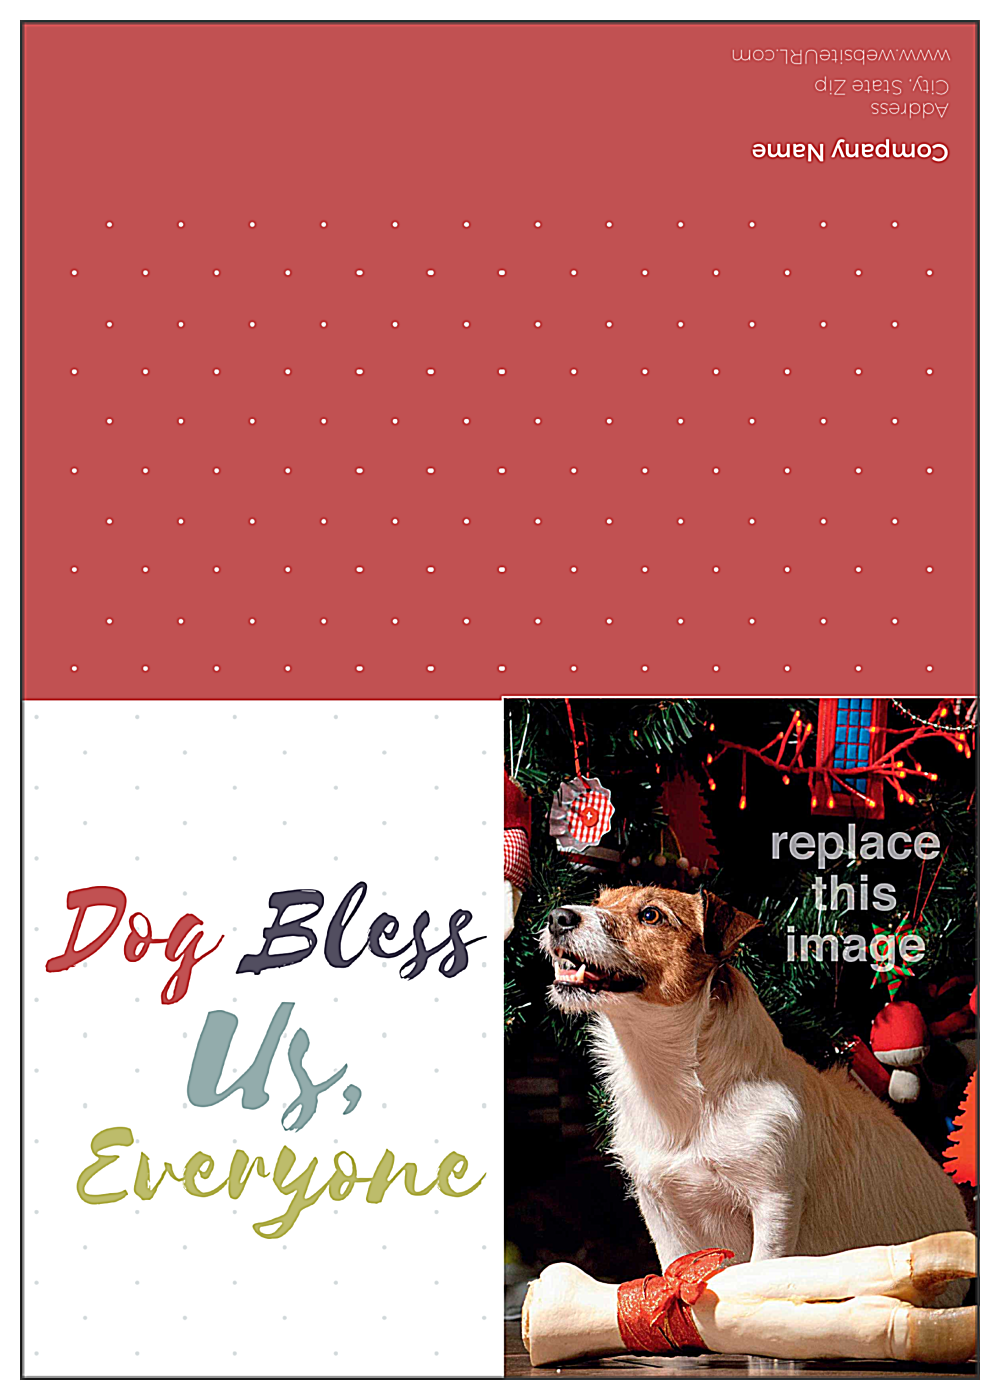 Dog Bless front - Greeting Cards Maker